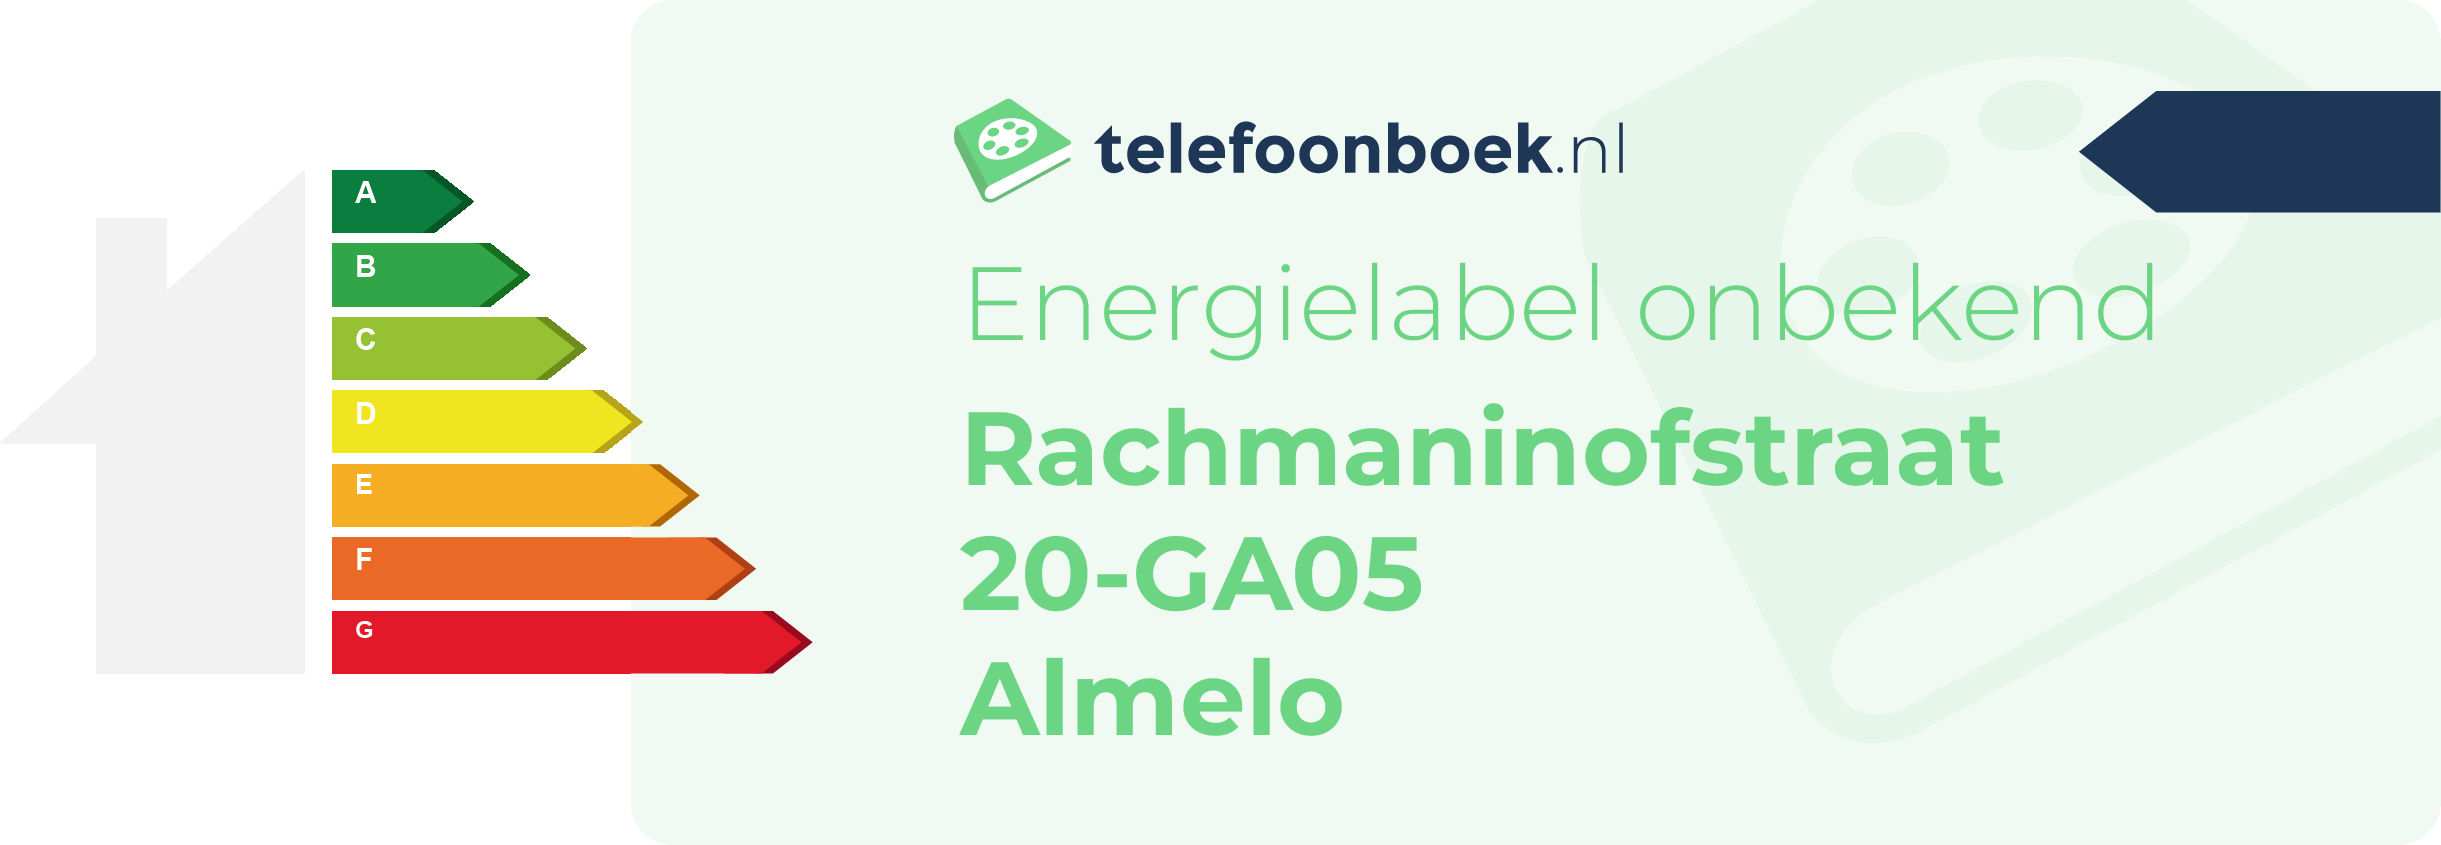 Energielabel Rachmaninofstraat 20-GA05 Almelo